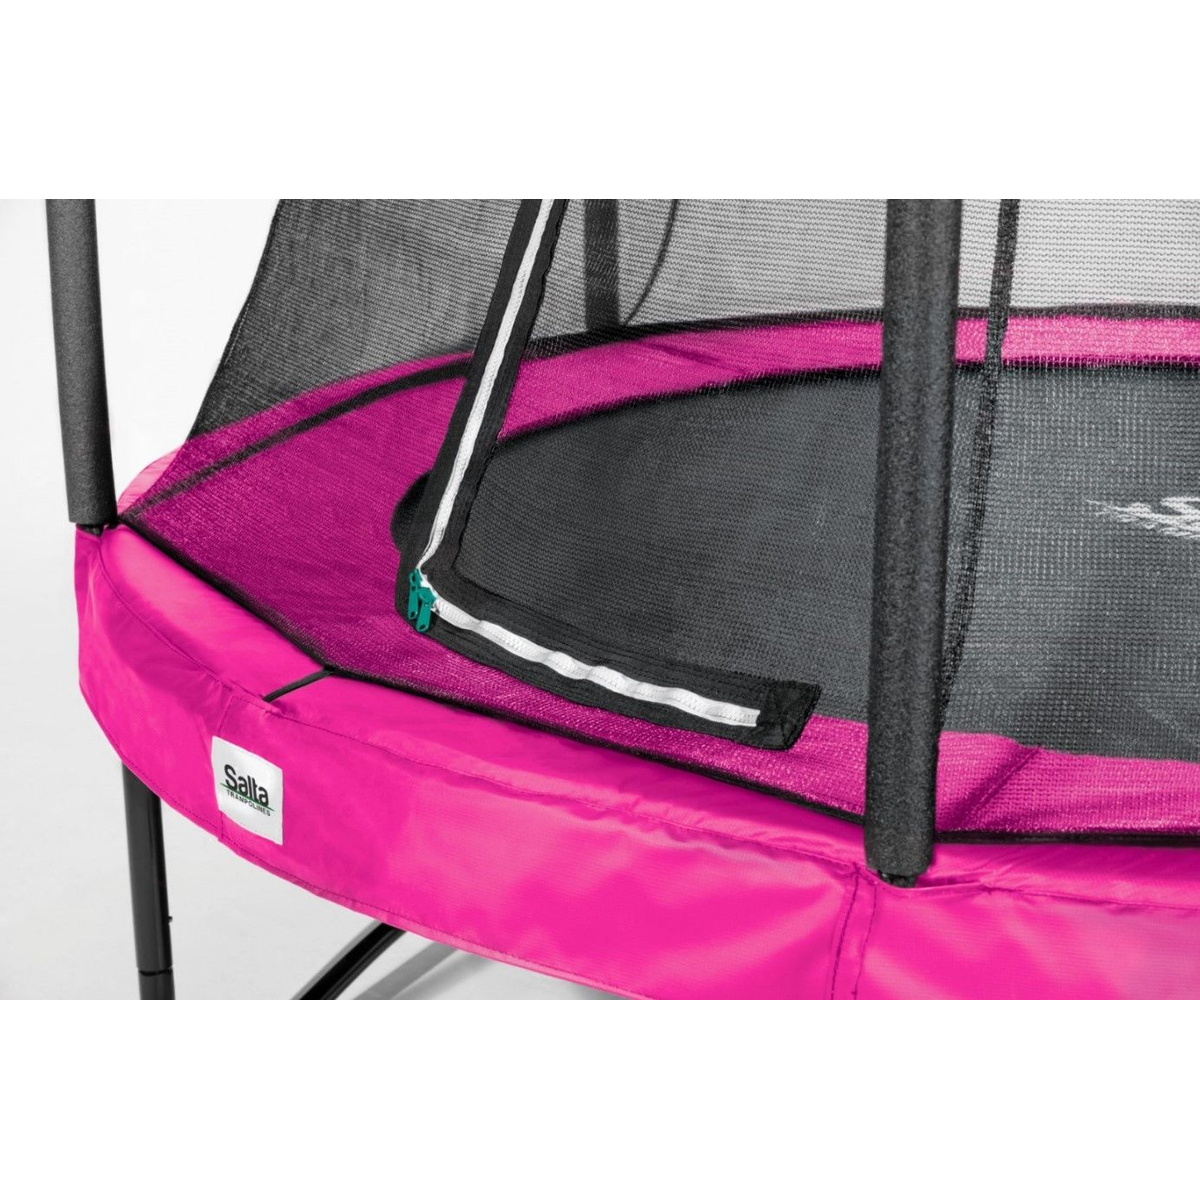 Salta Comfort Edition 305 Roze Trampoline + Veiligheidsnet